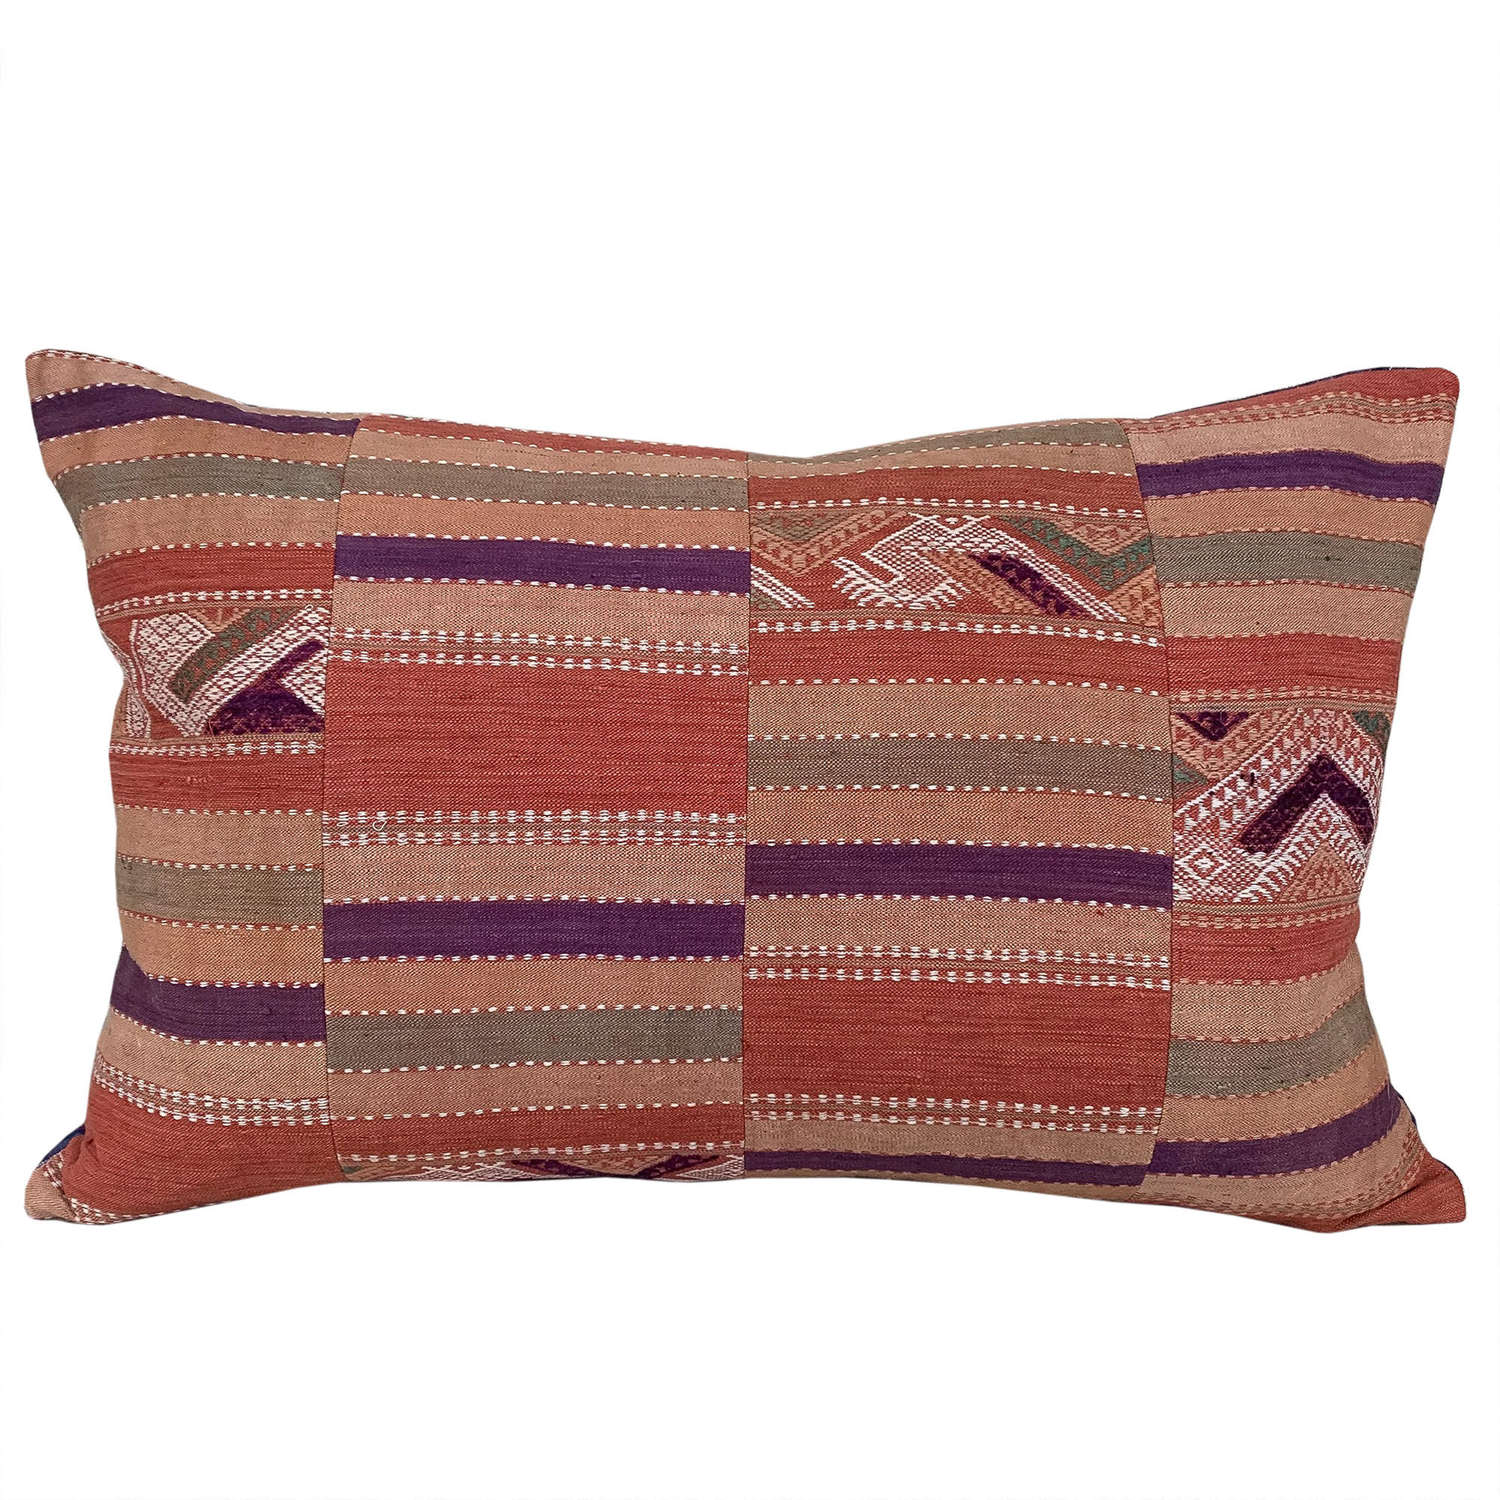 SE Asian Textile Cushion